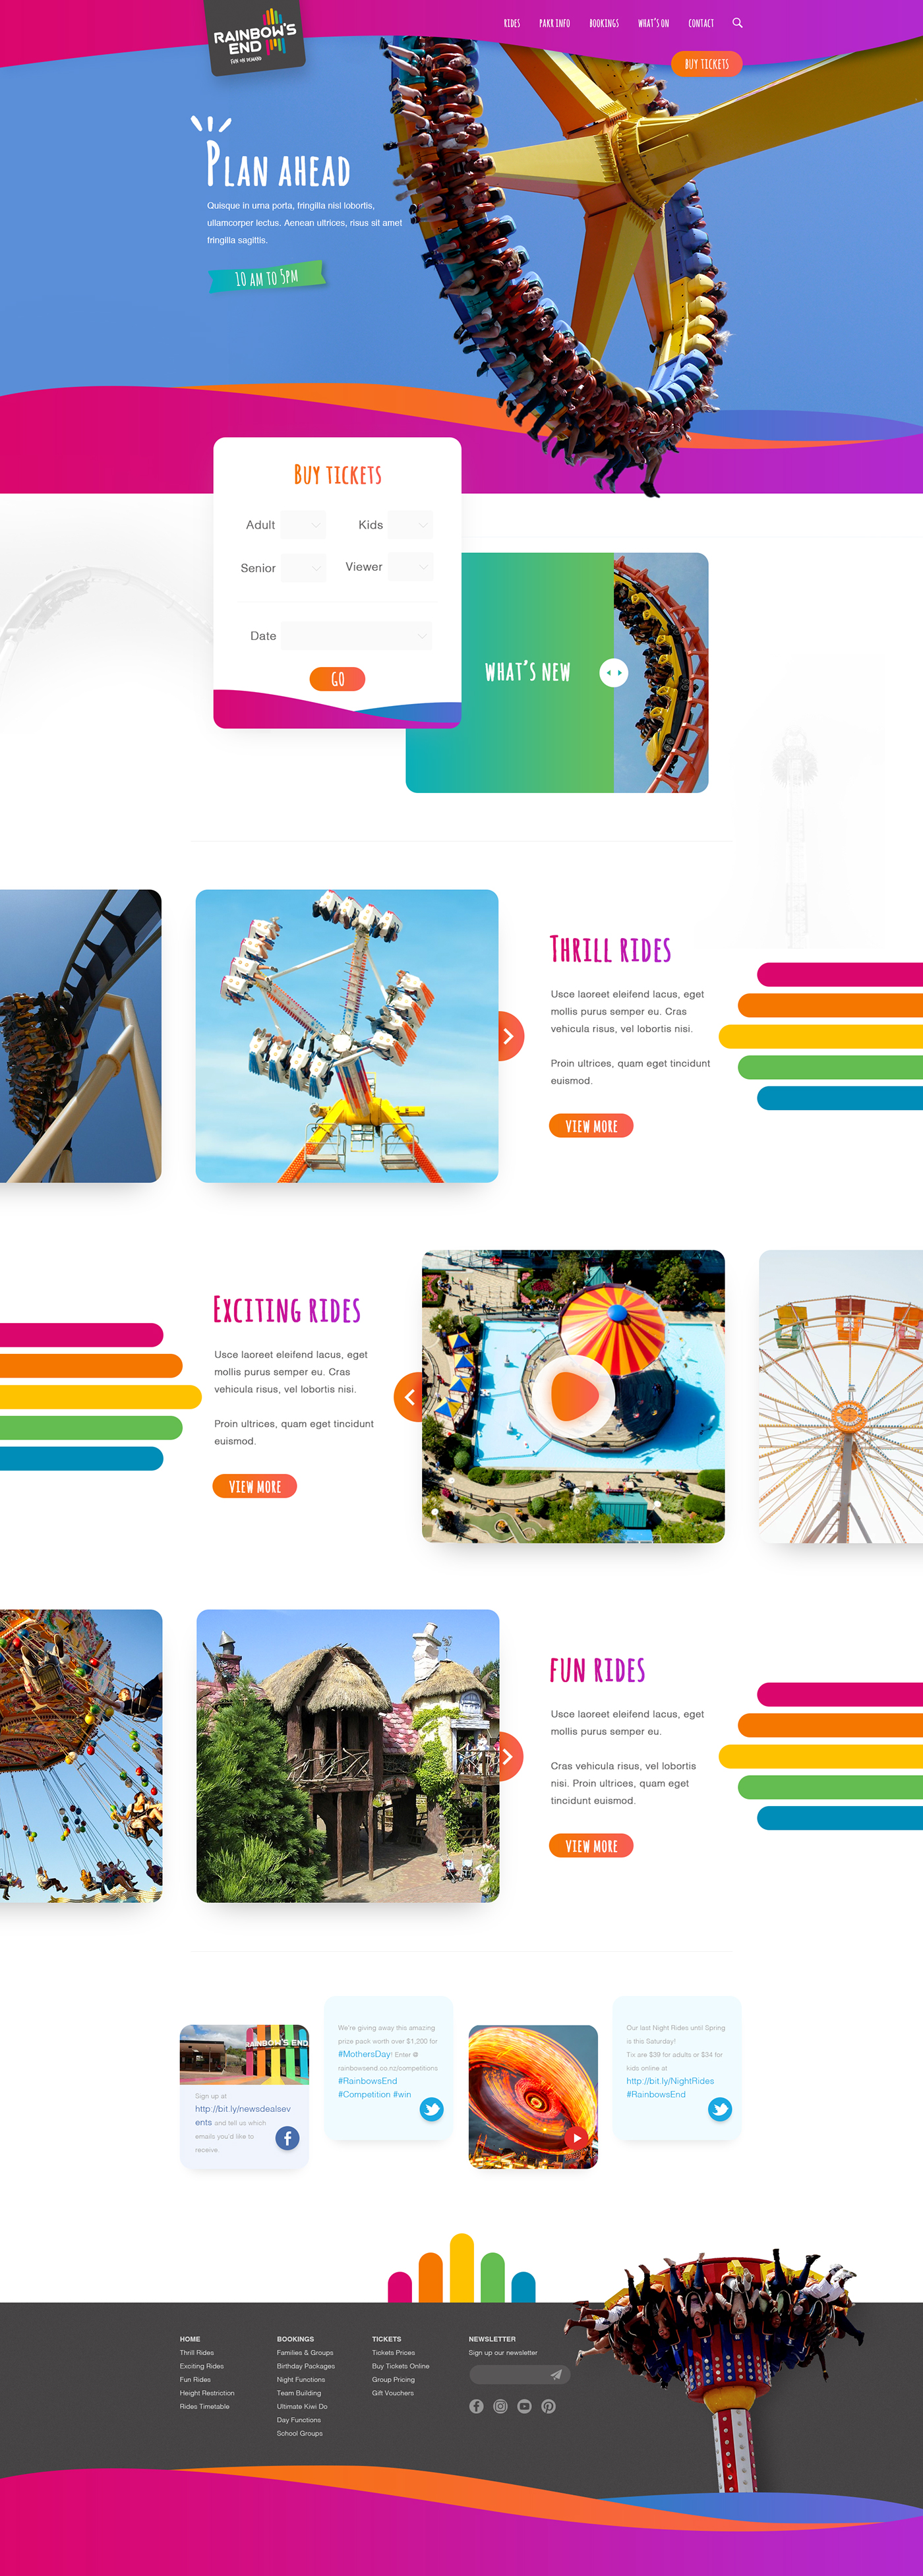 Web Design  redesign Theme Park Website Design